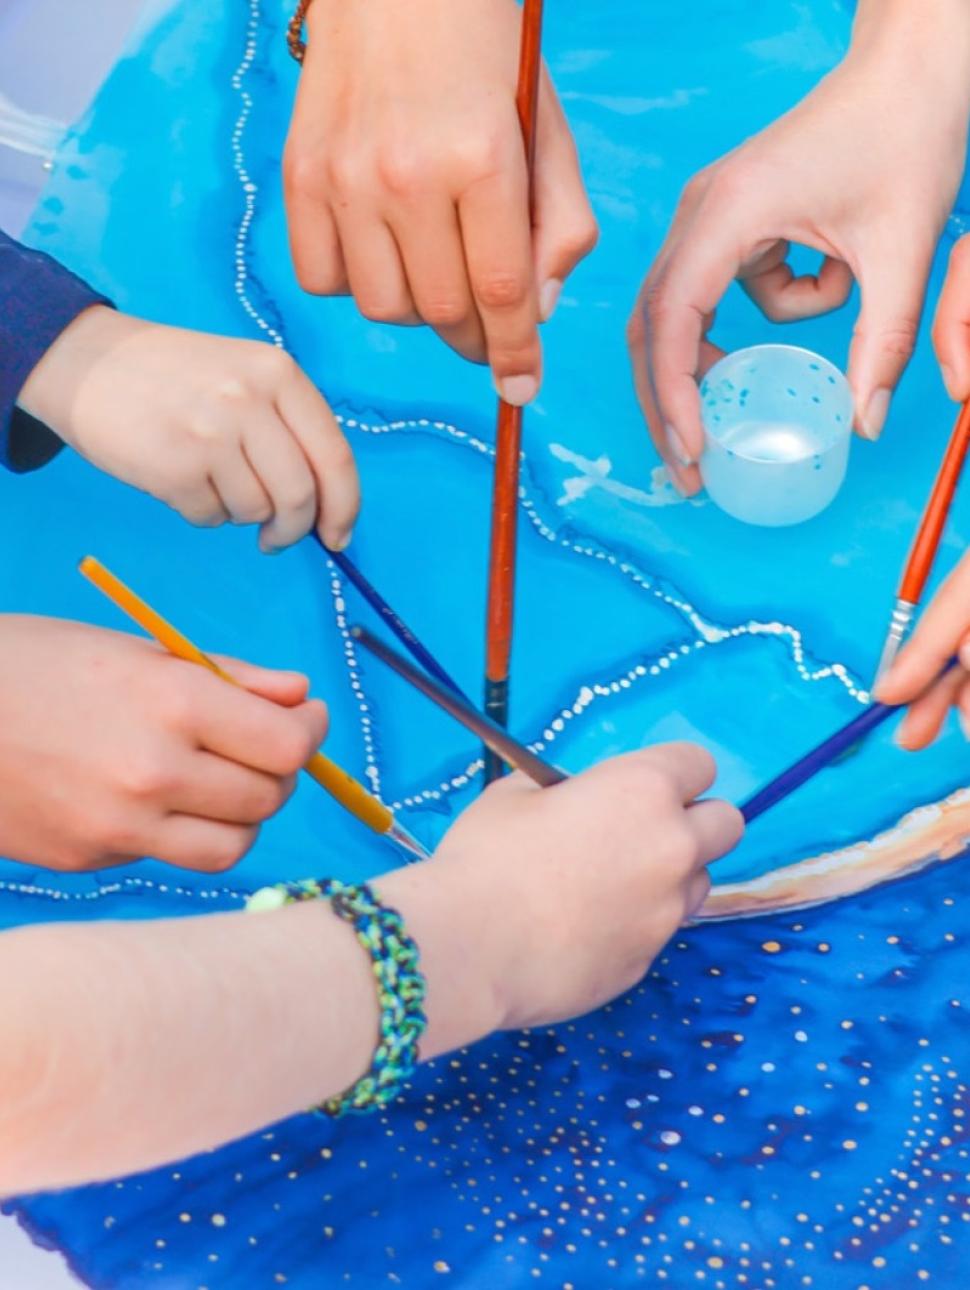 Children's hands holding paintbrushes above a blue communal artwork 